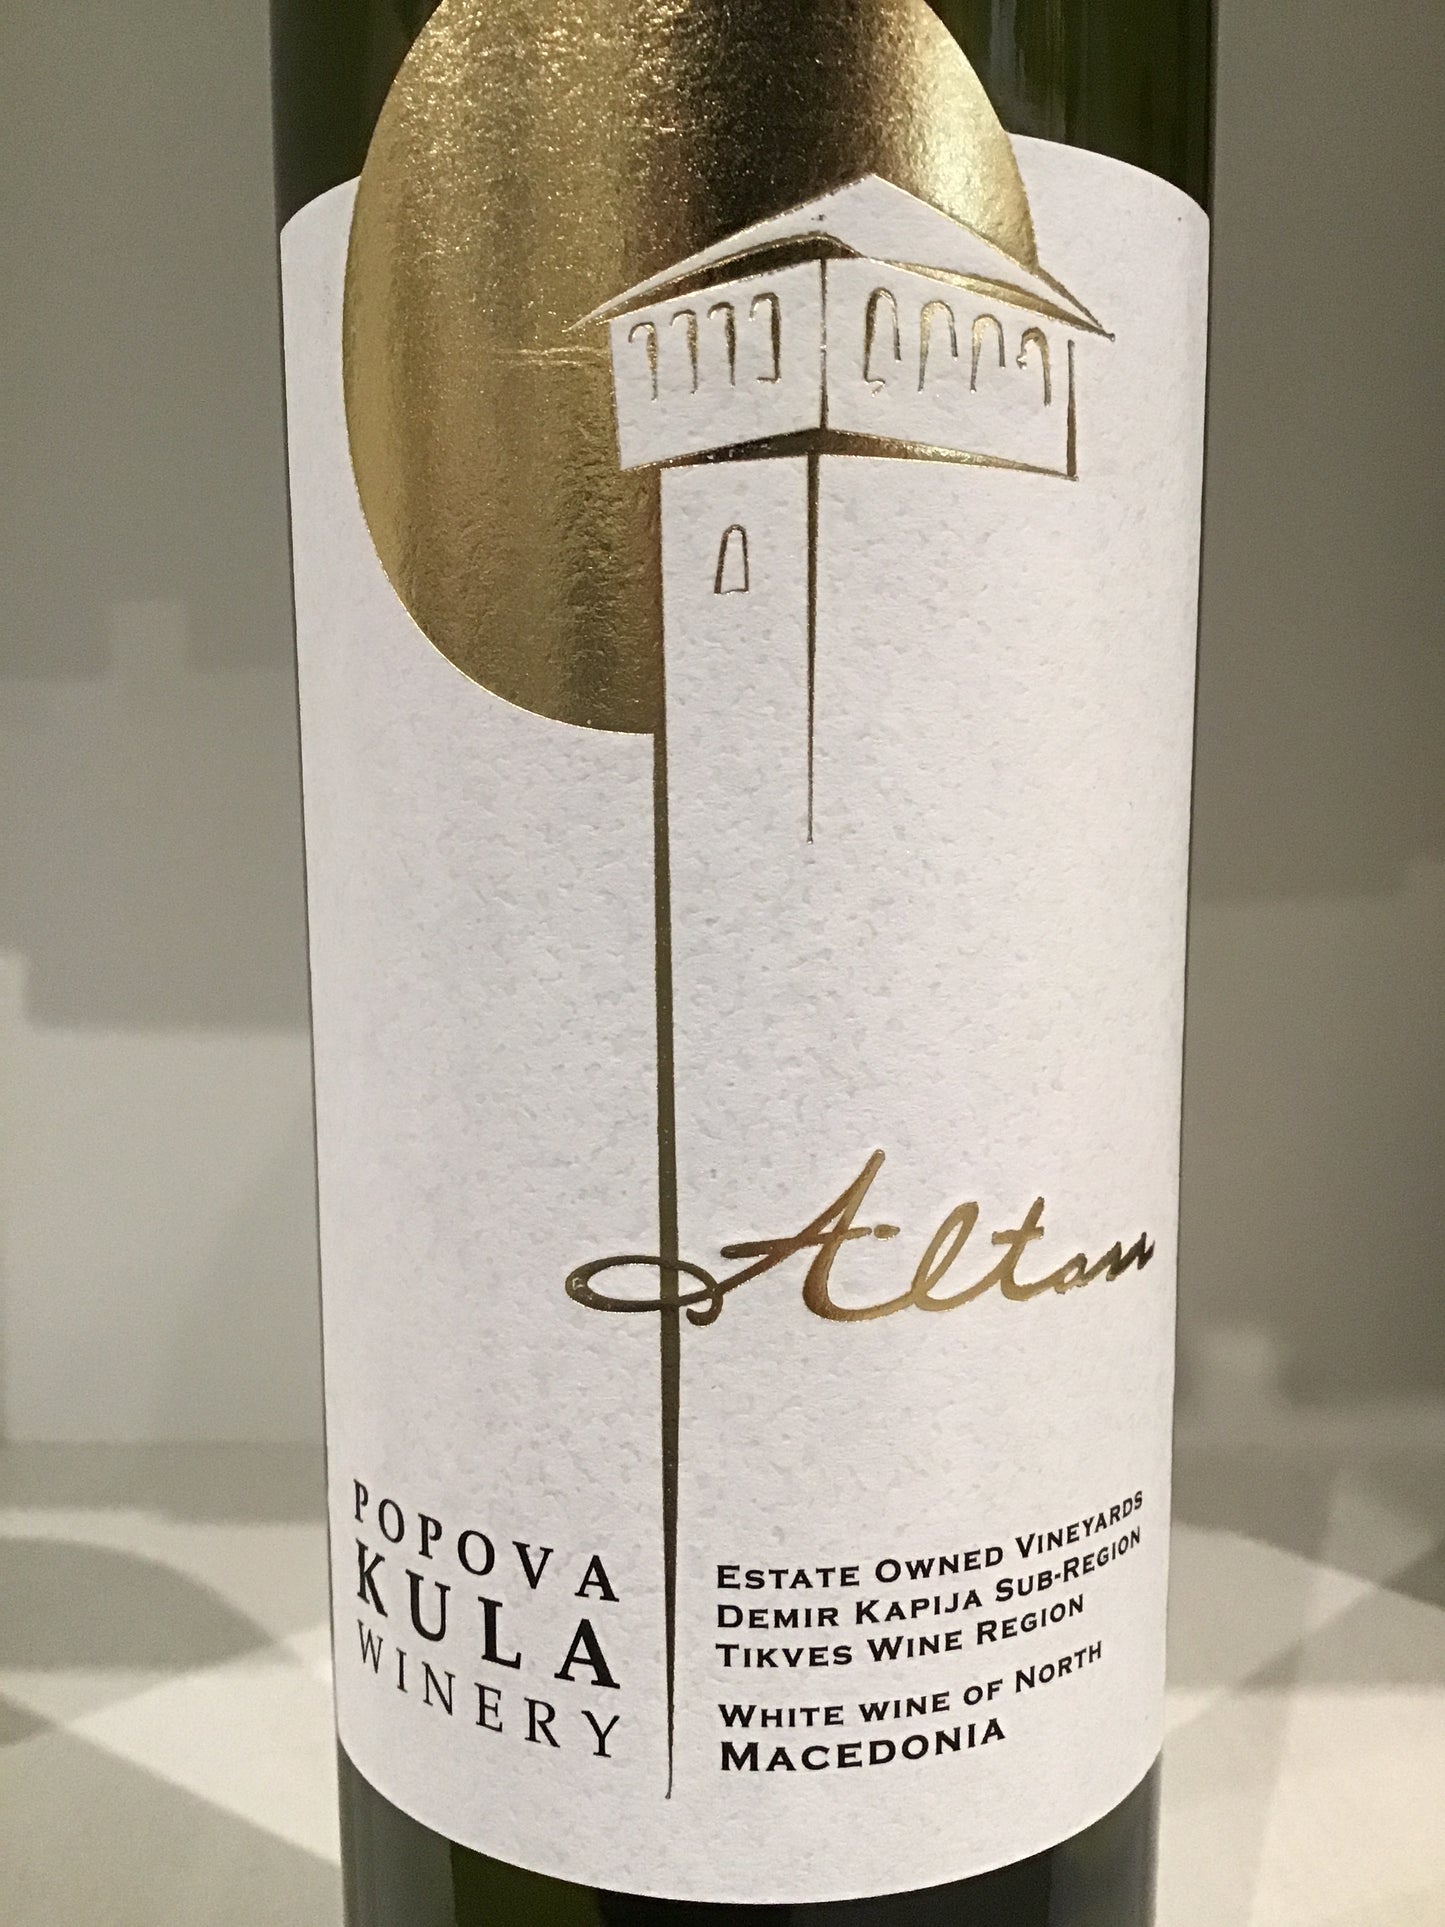 Popova Kula 'Altan' - White Blend - Tikves